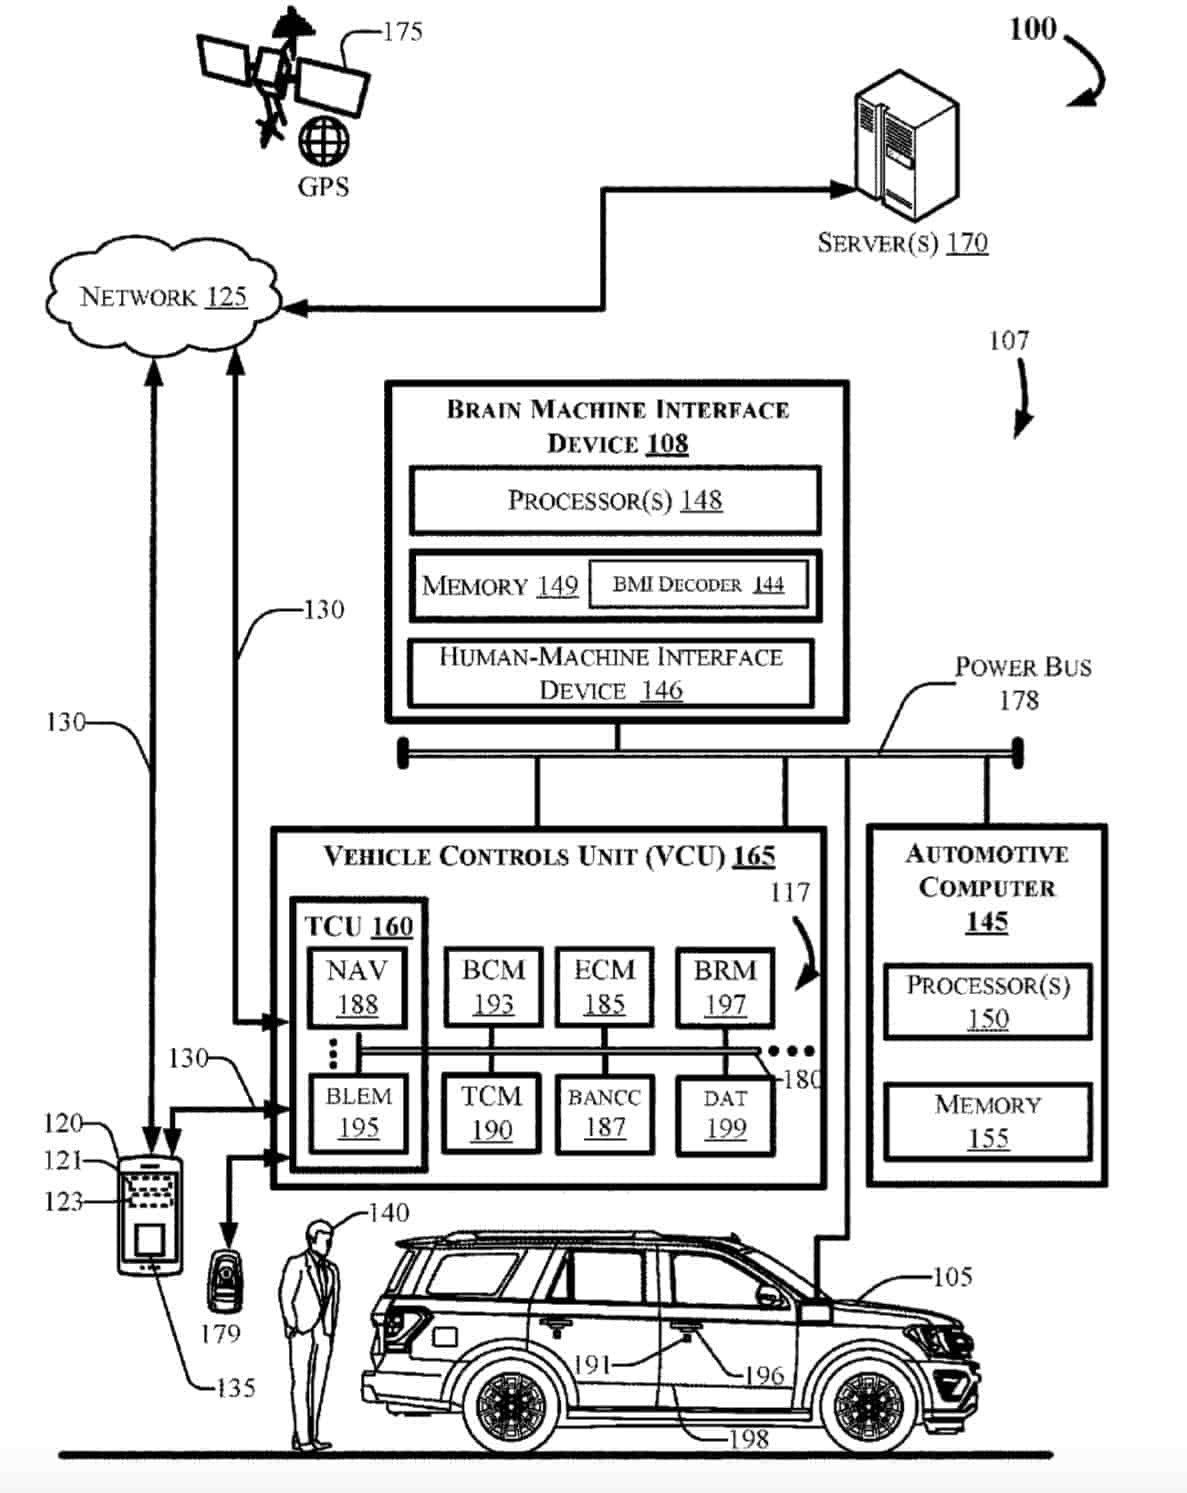 ford-brain-machine-interface-patent-image_100831597_h-min.jpg